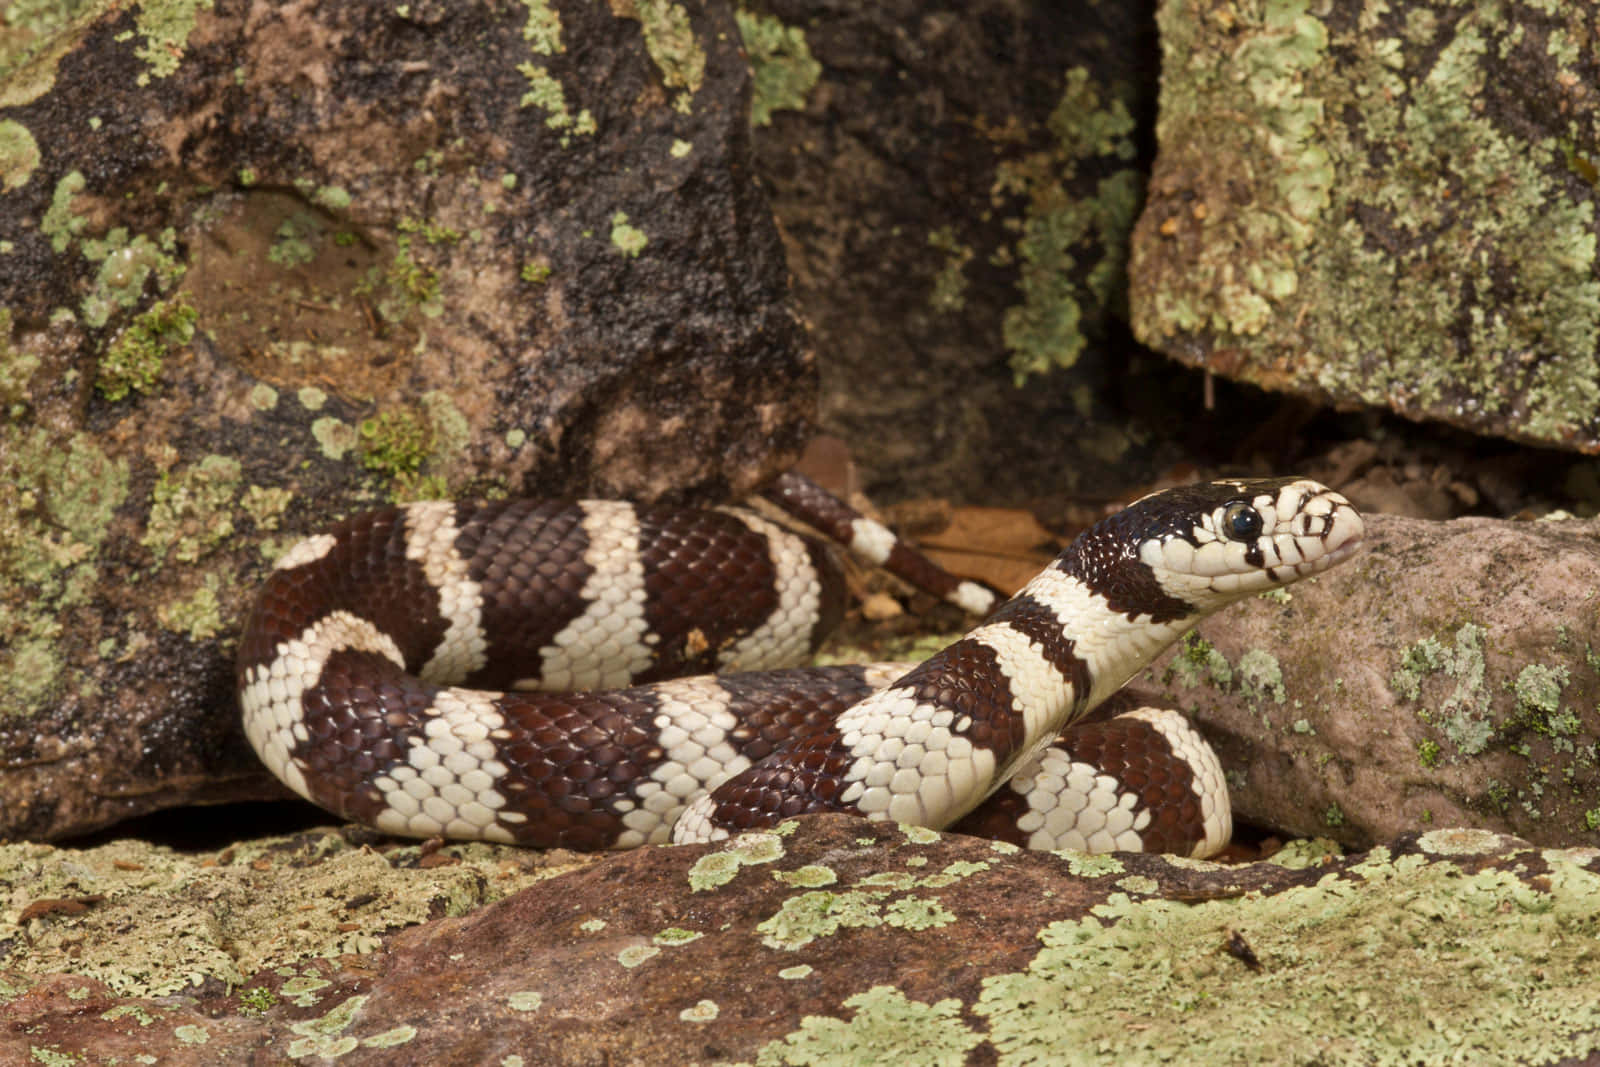 A Closeup of a Beautiful King Snake